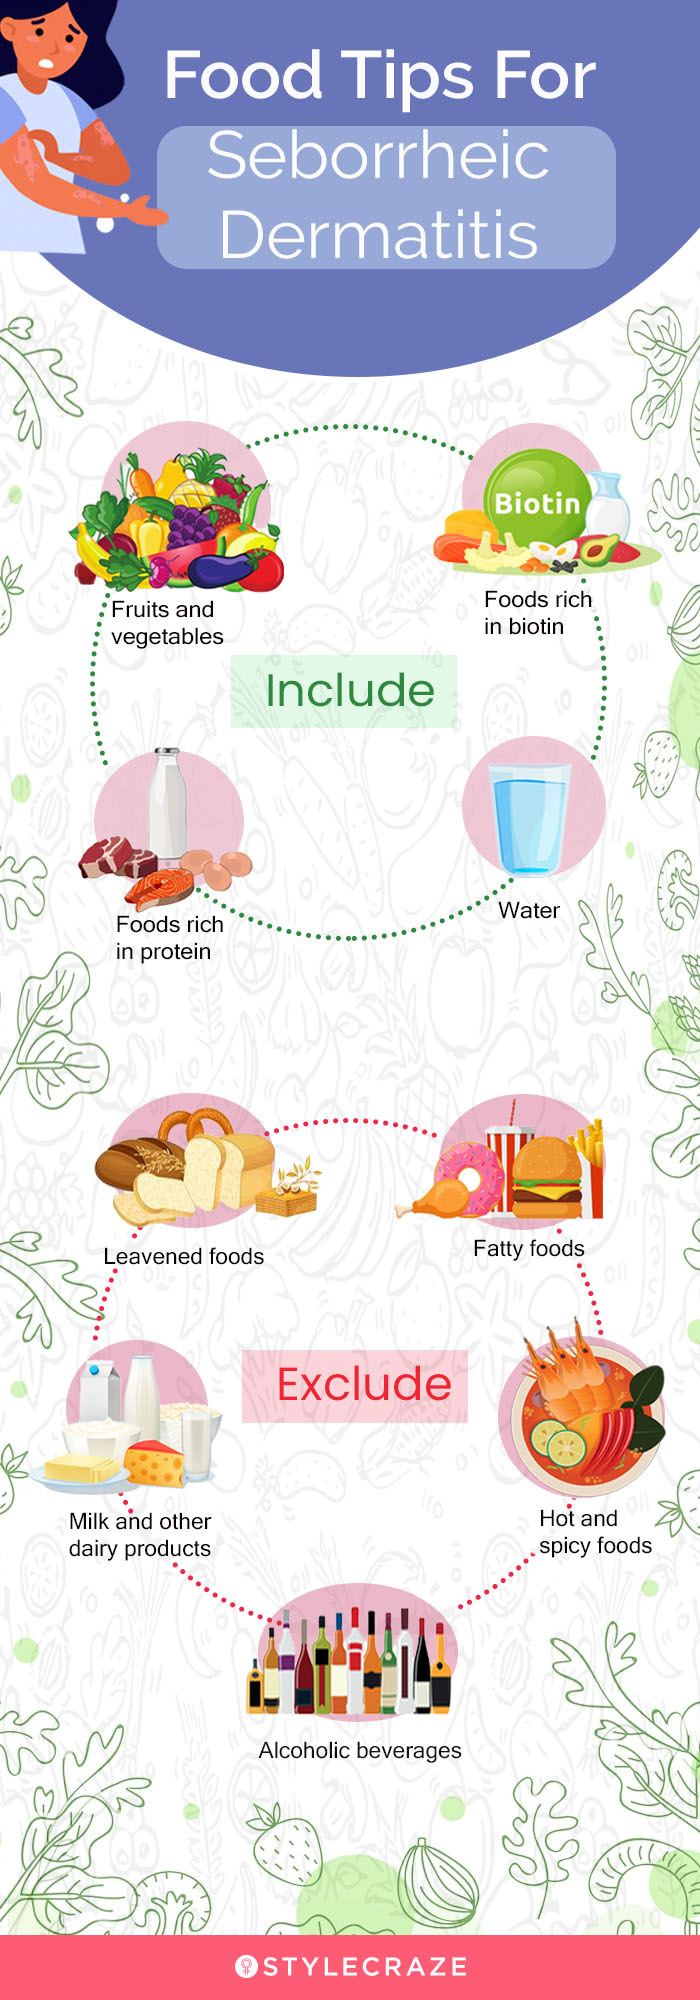 food tips for seborrheic dermatitis (infographic)